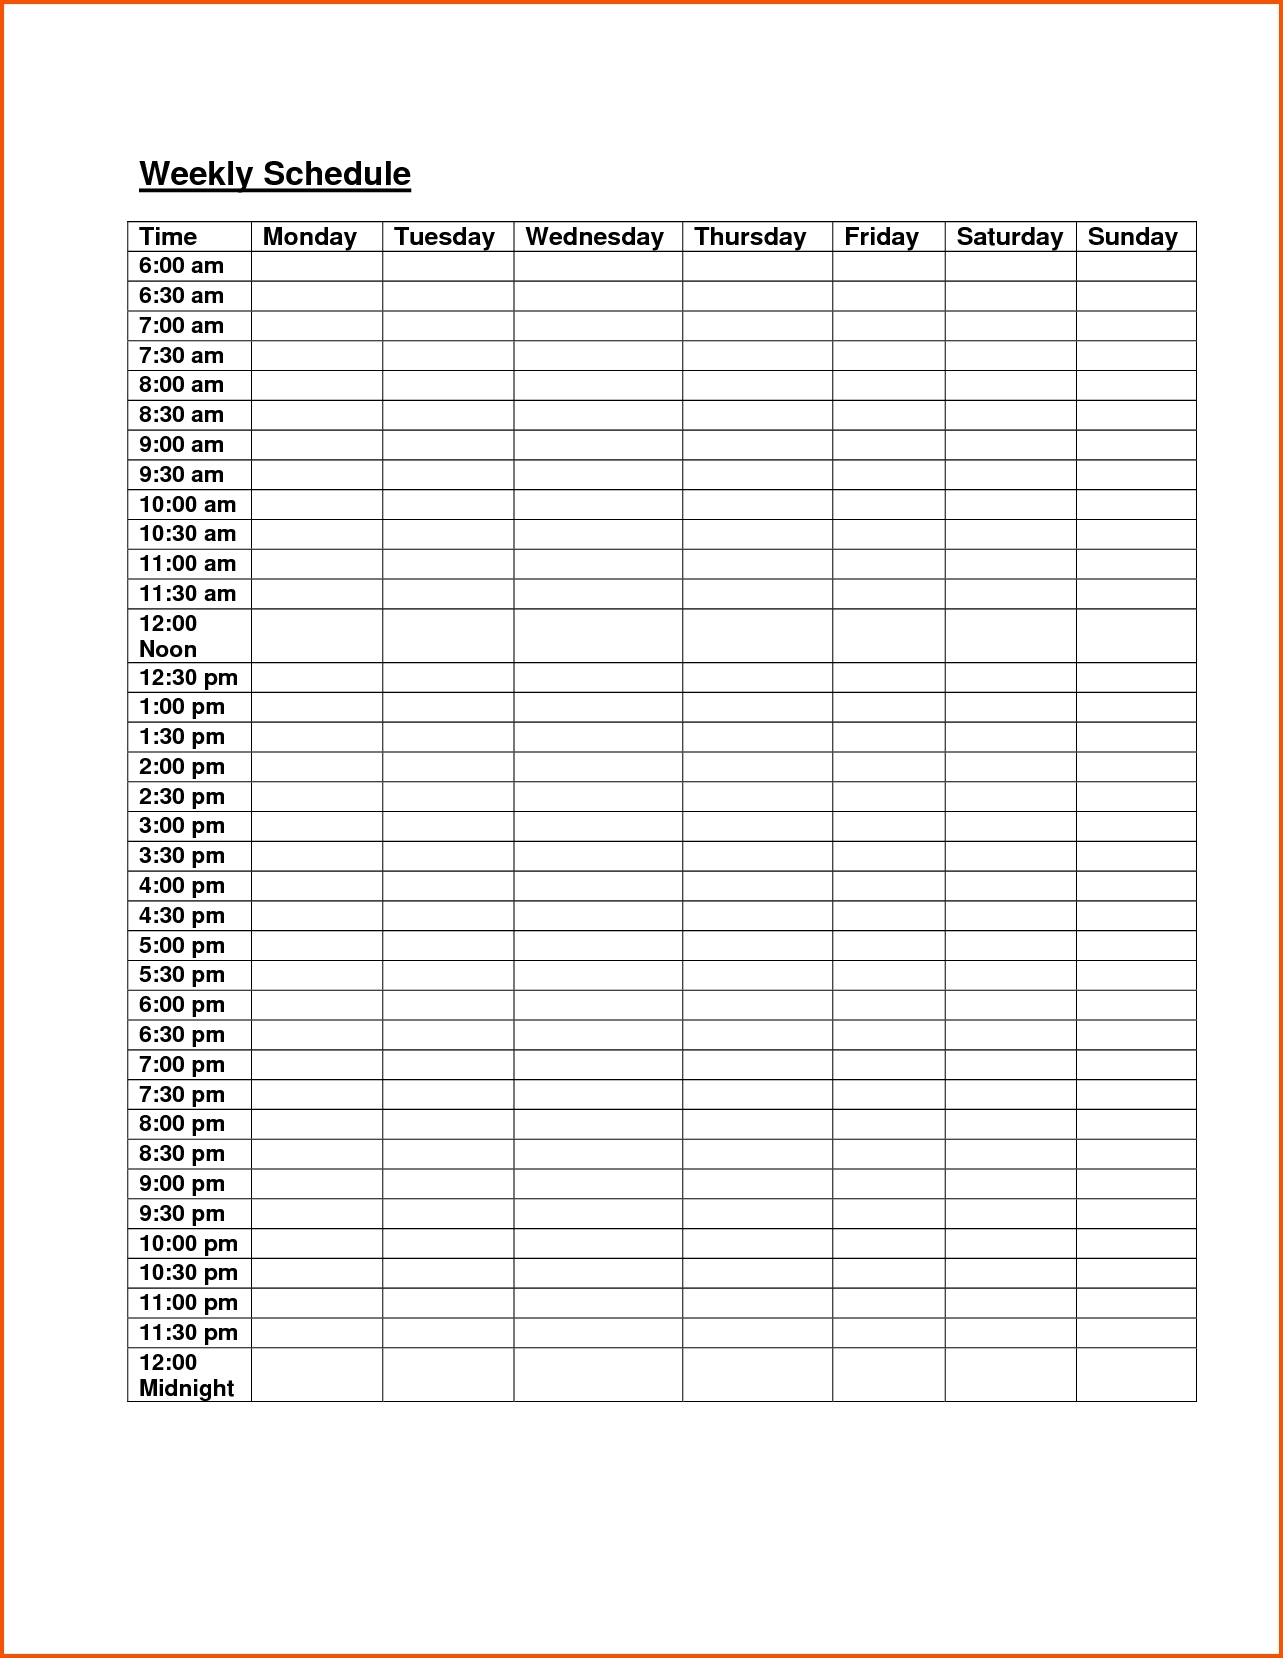 Homework Agenda Template 7Th Grade | Template Calendar Printable in Homework Agenda Template 7Th Grade